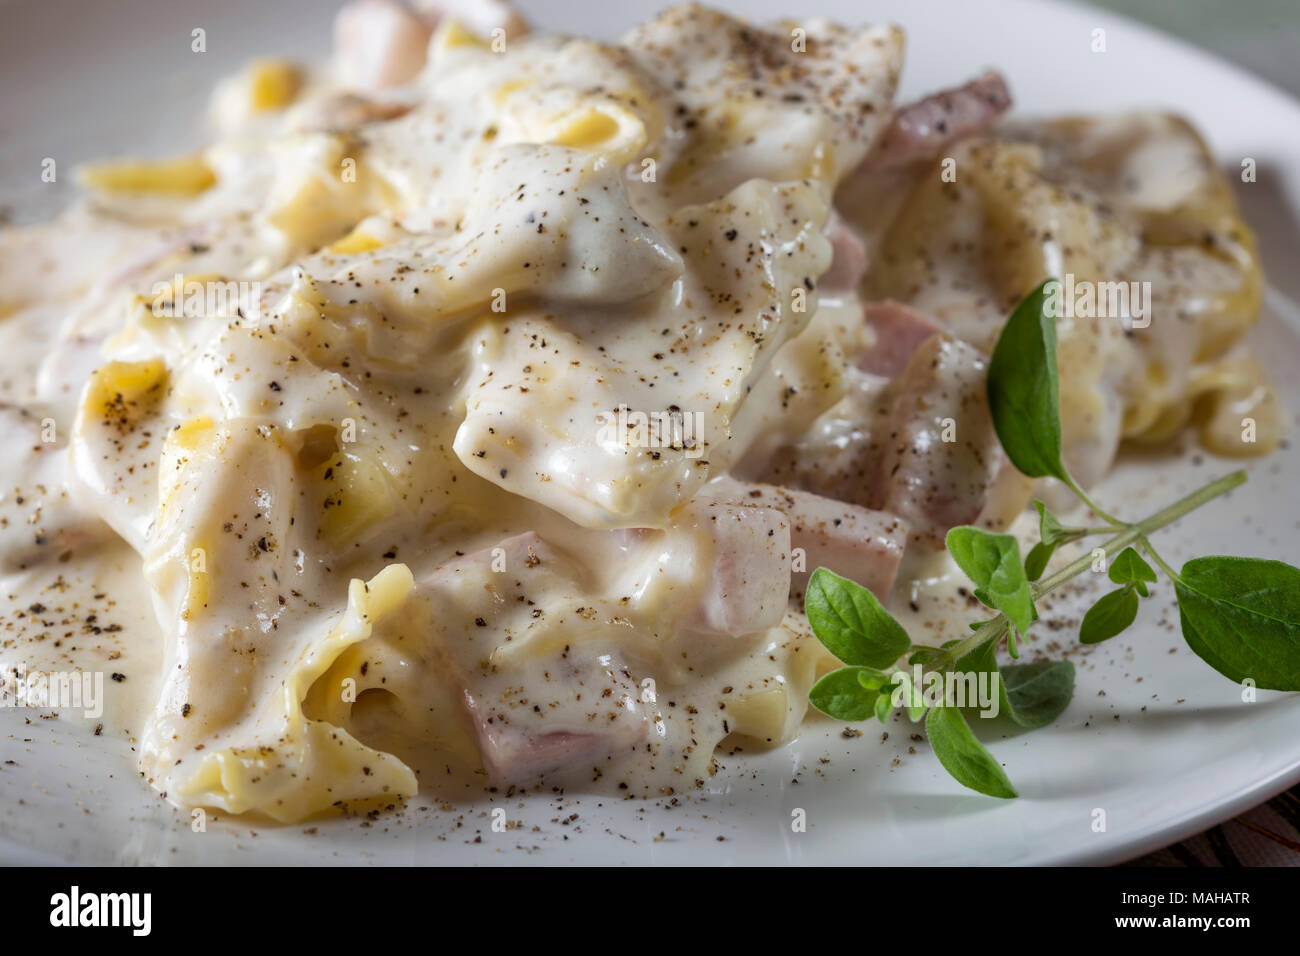 https://c8.alamy.com/comp/MAHATR/tortellini-and-ravioli-with-smoked-ham-and-mushrooms-and-sour-cream-sauce-MAHATR.jpg